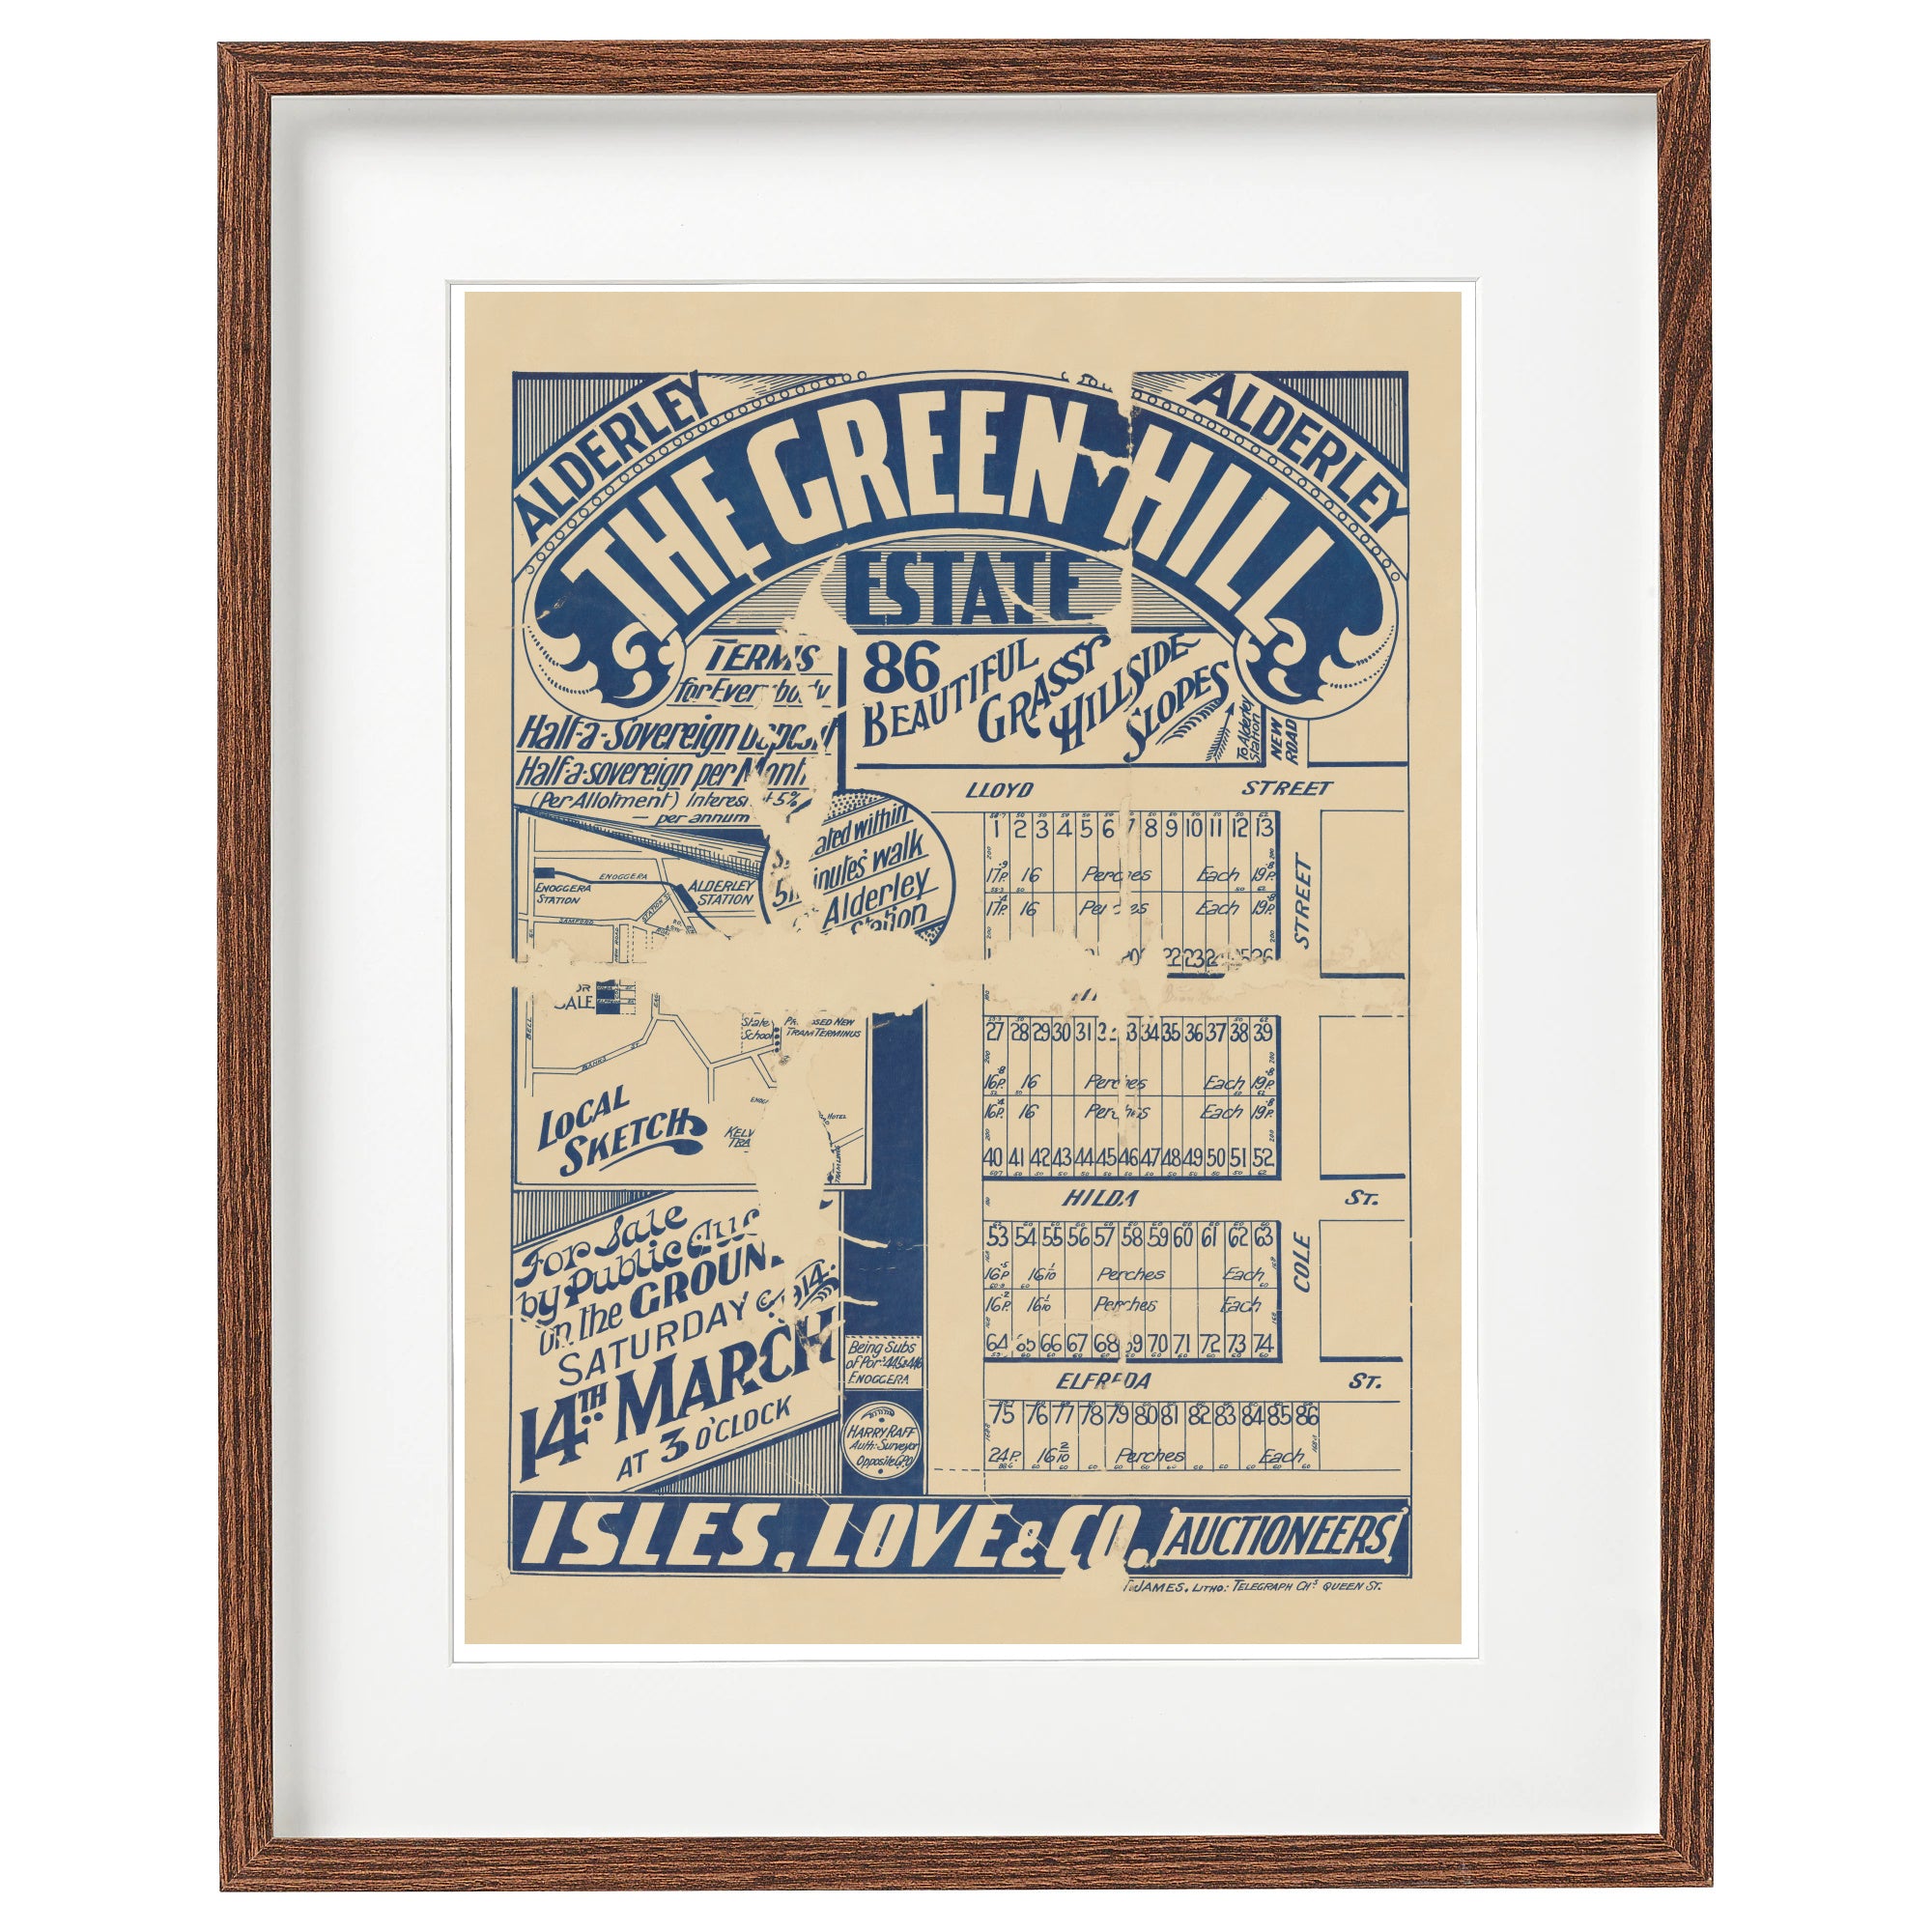 1914 Alderley - The Green Hill Estate